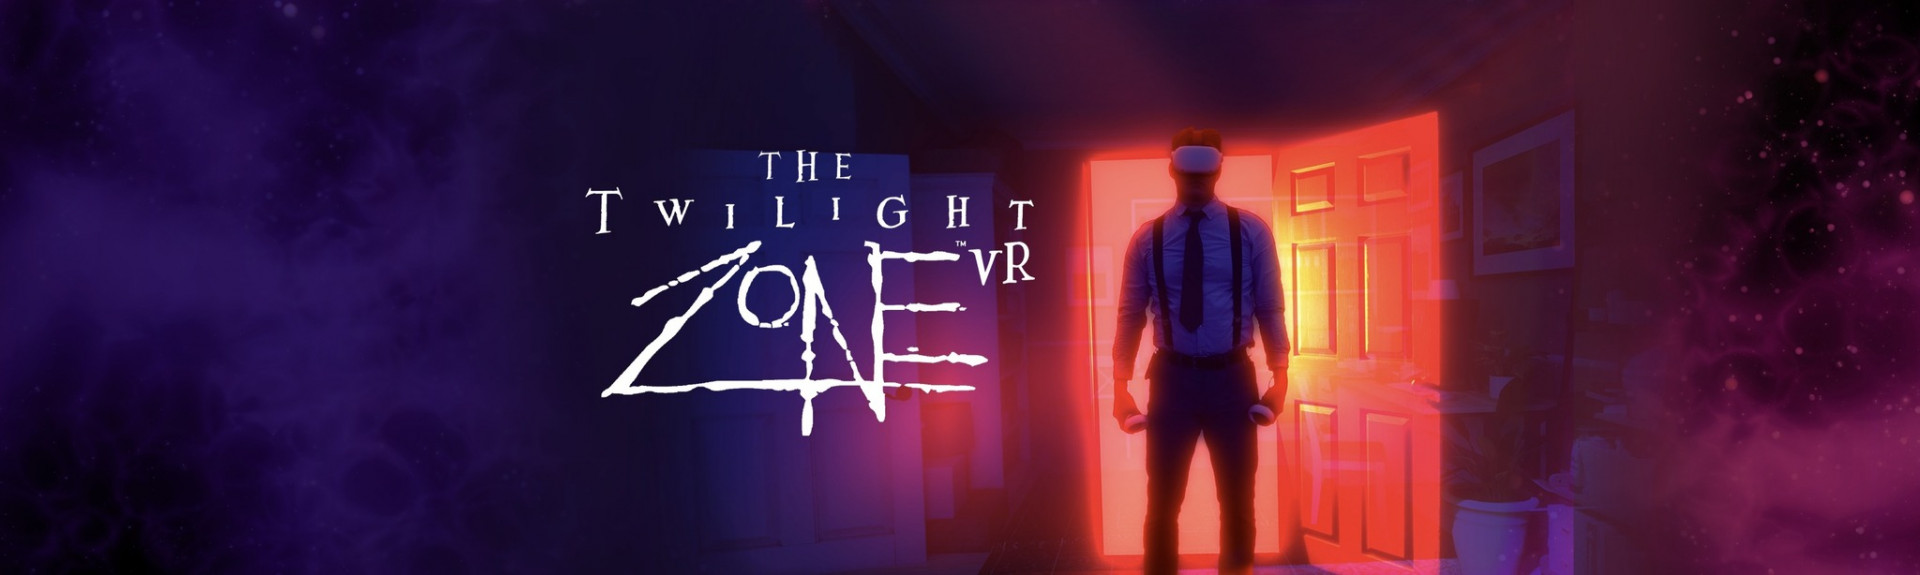 The Twilight Zone VR: ANÁLISIS